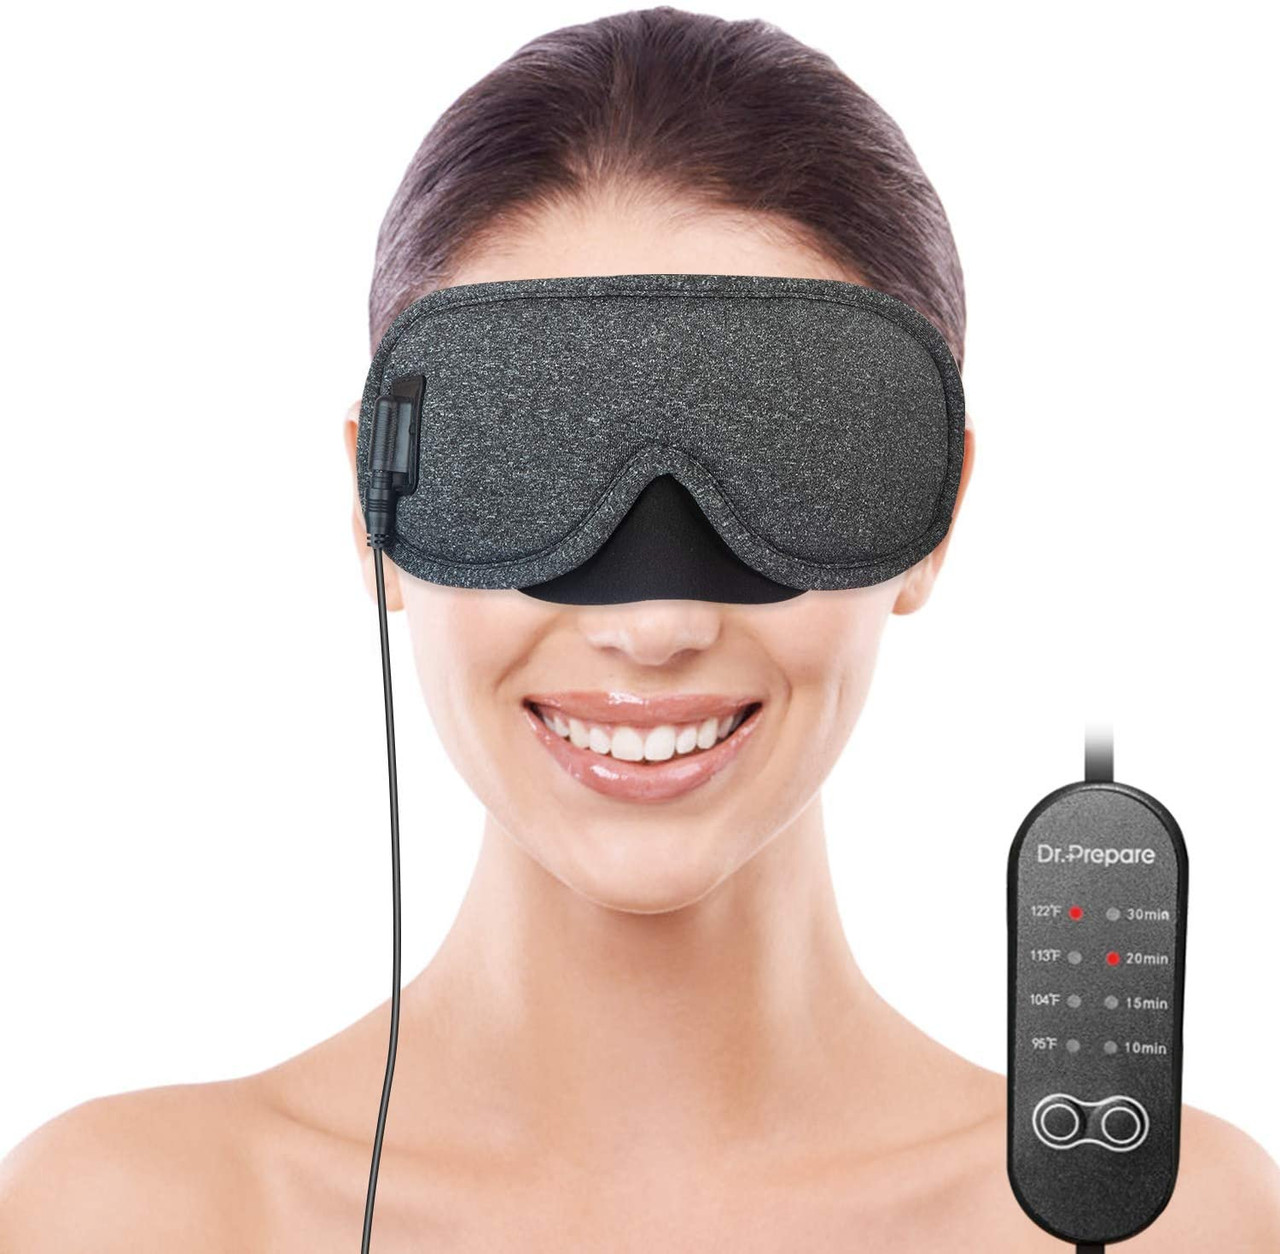 Buy DRPREPARE Heated Eye Mask USB Eye Mask for Dry Eyes with